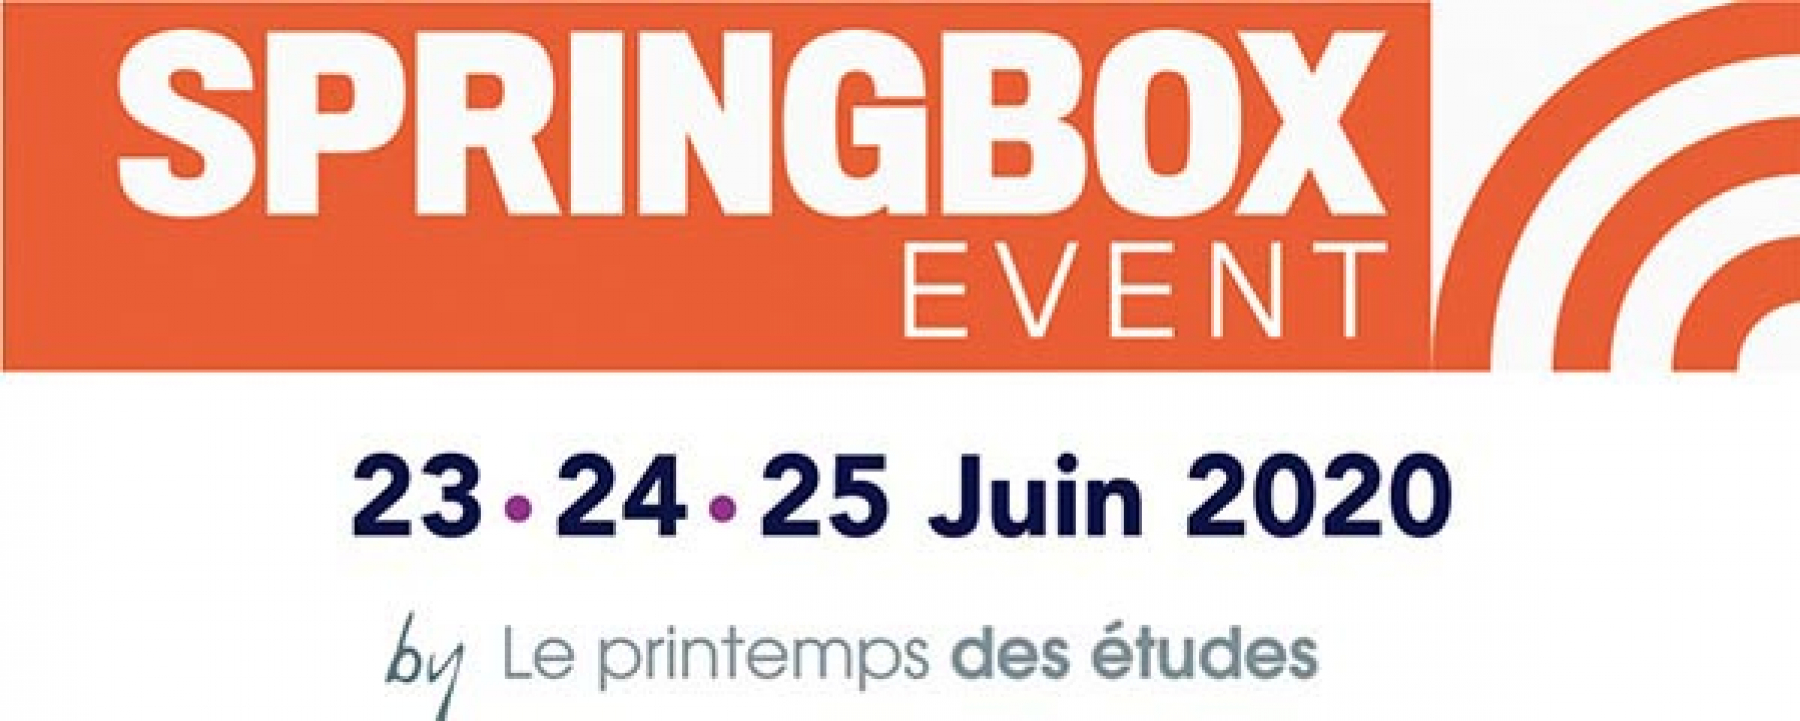 Webinar Spring Box Event, organisé par Empresarial, les 23, 24 et 25 juin 2020